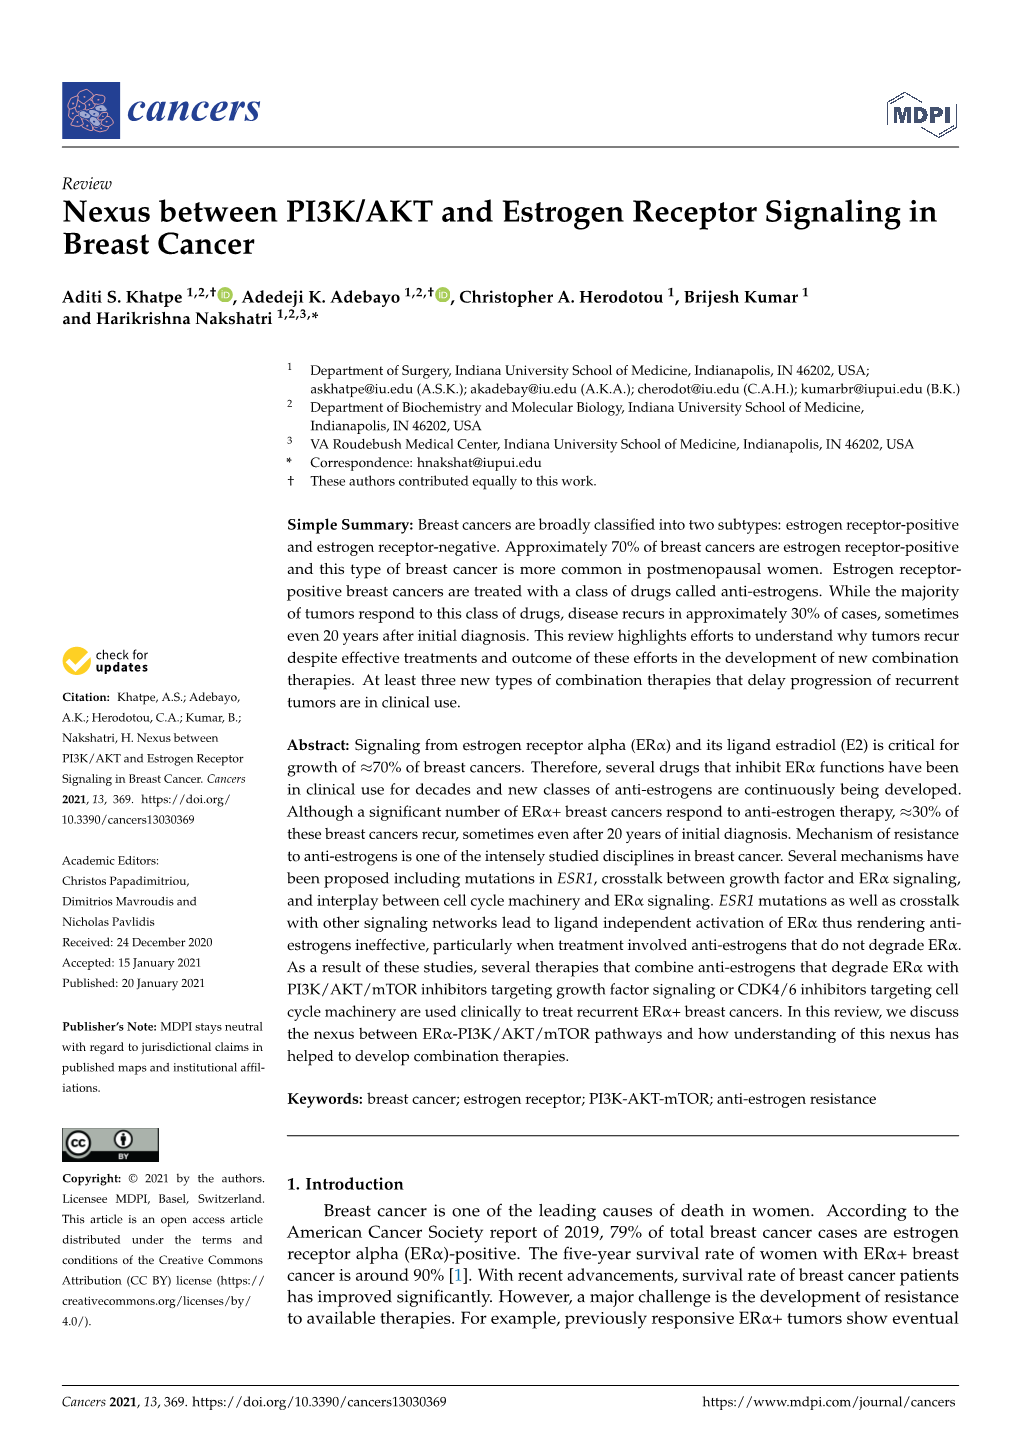 Nexus Between PI3K/AKT and Estrogen Receptor Signaling in Breast Cancer